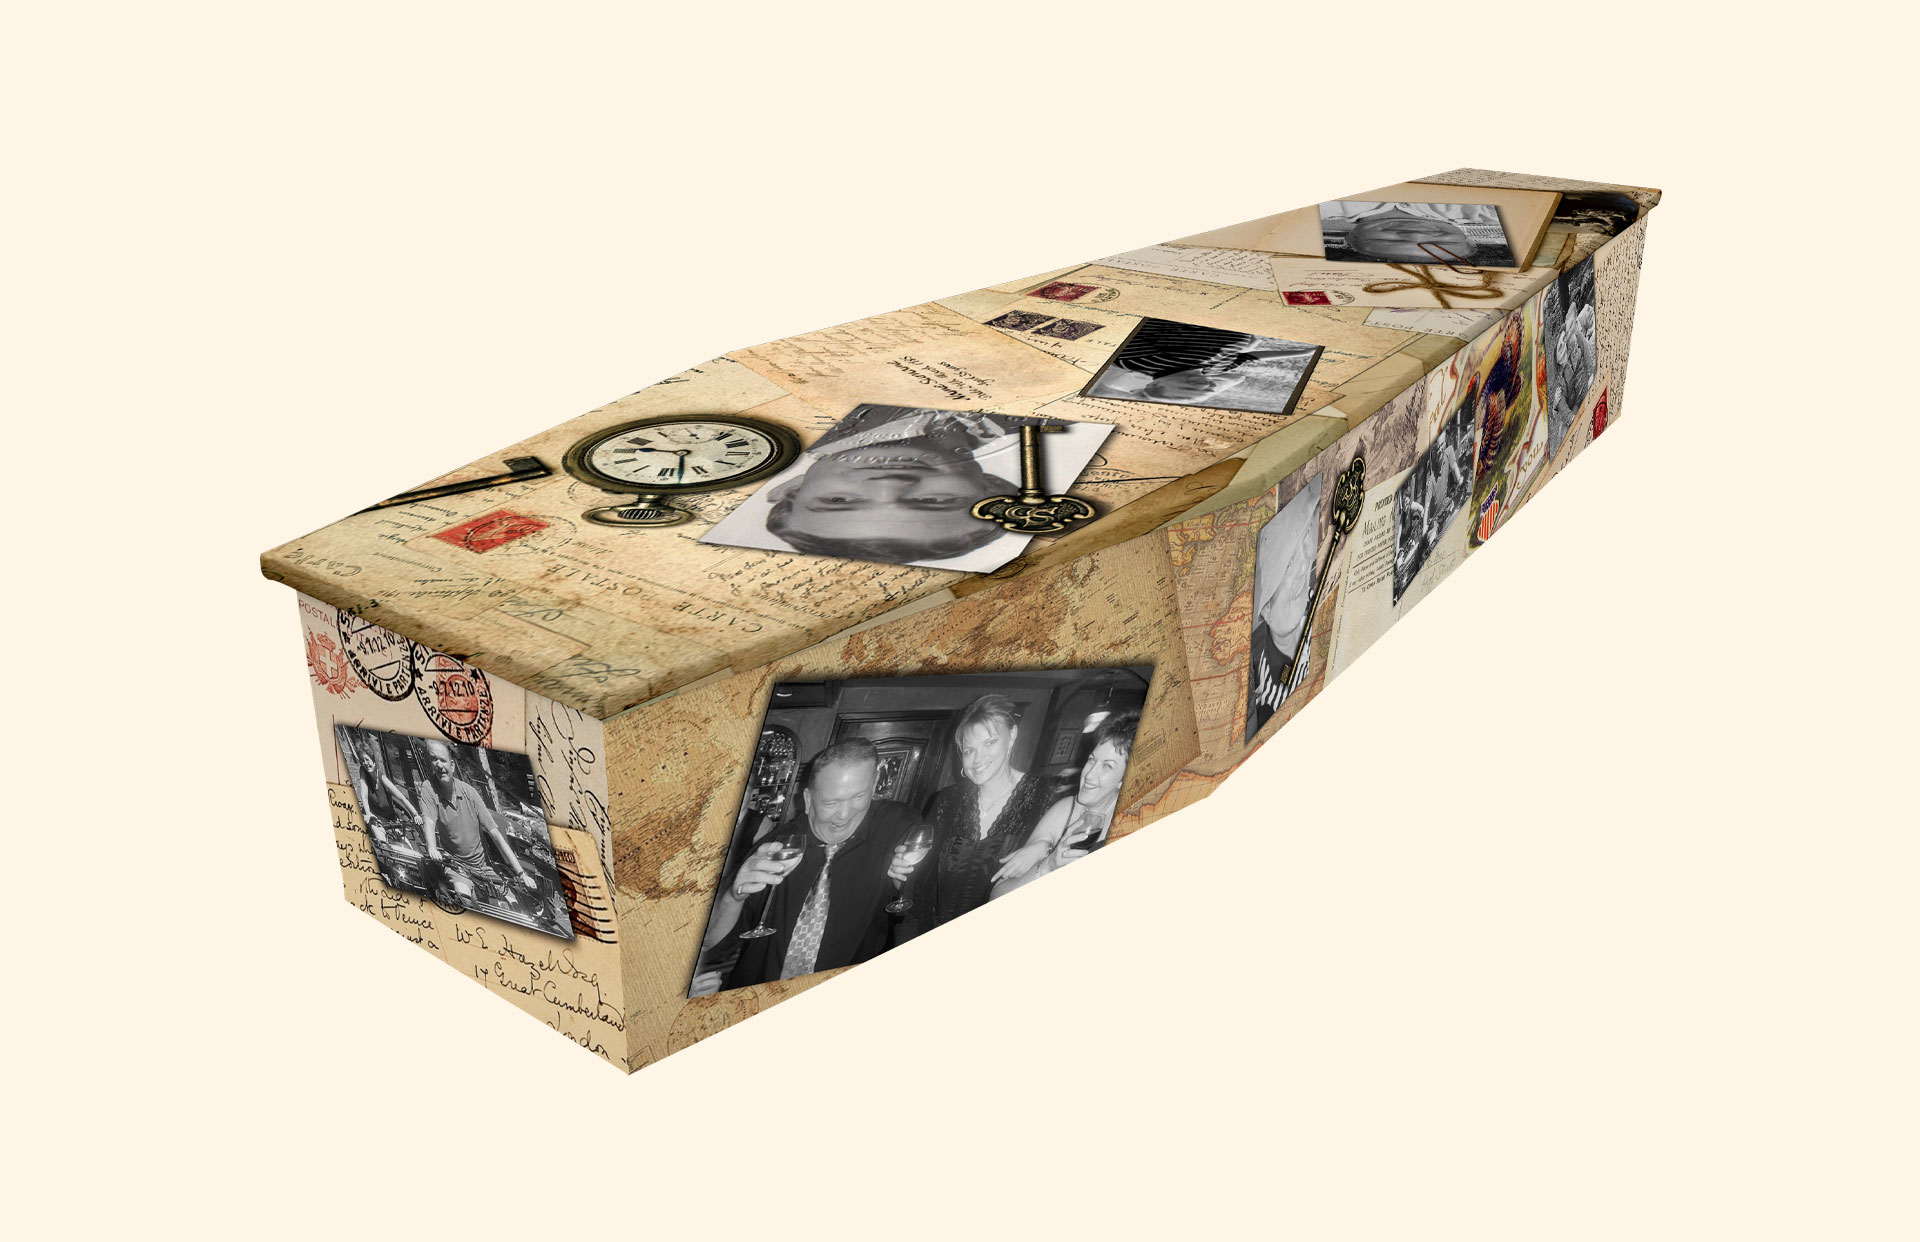 Treasured Times over a cardboard coffin